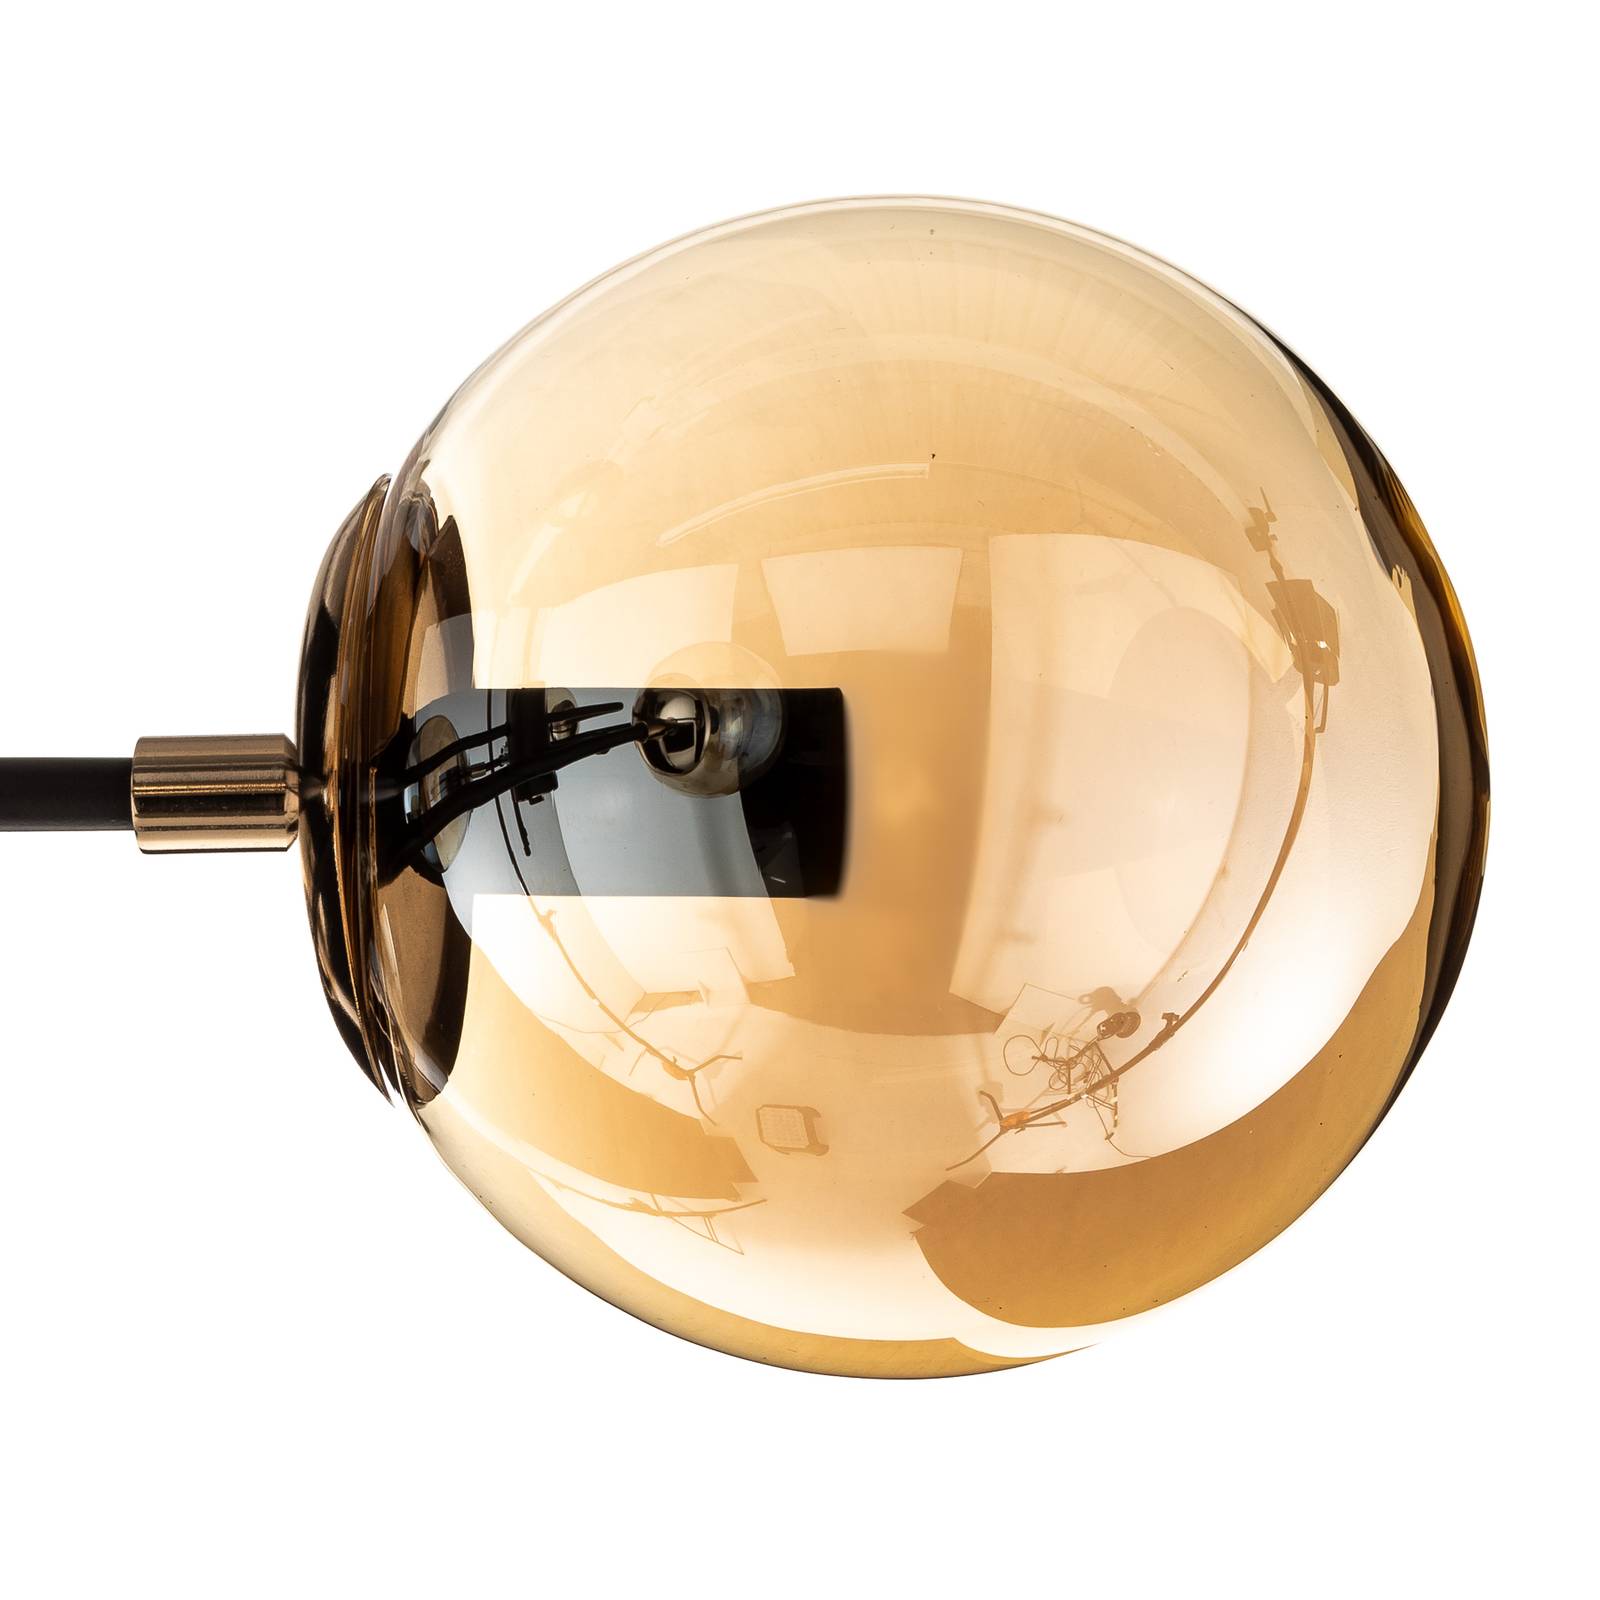 Primas loftlampe sort-guld højde 37,5 cm